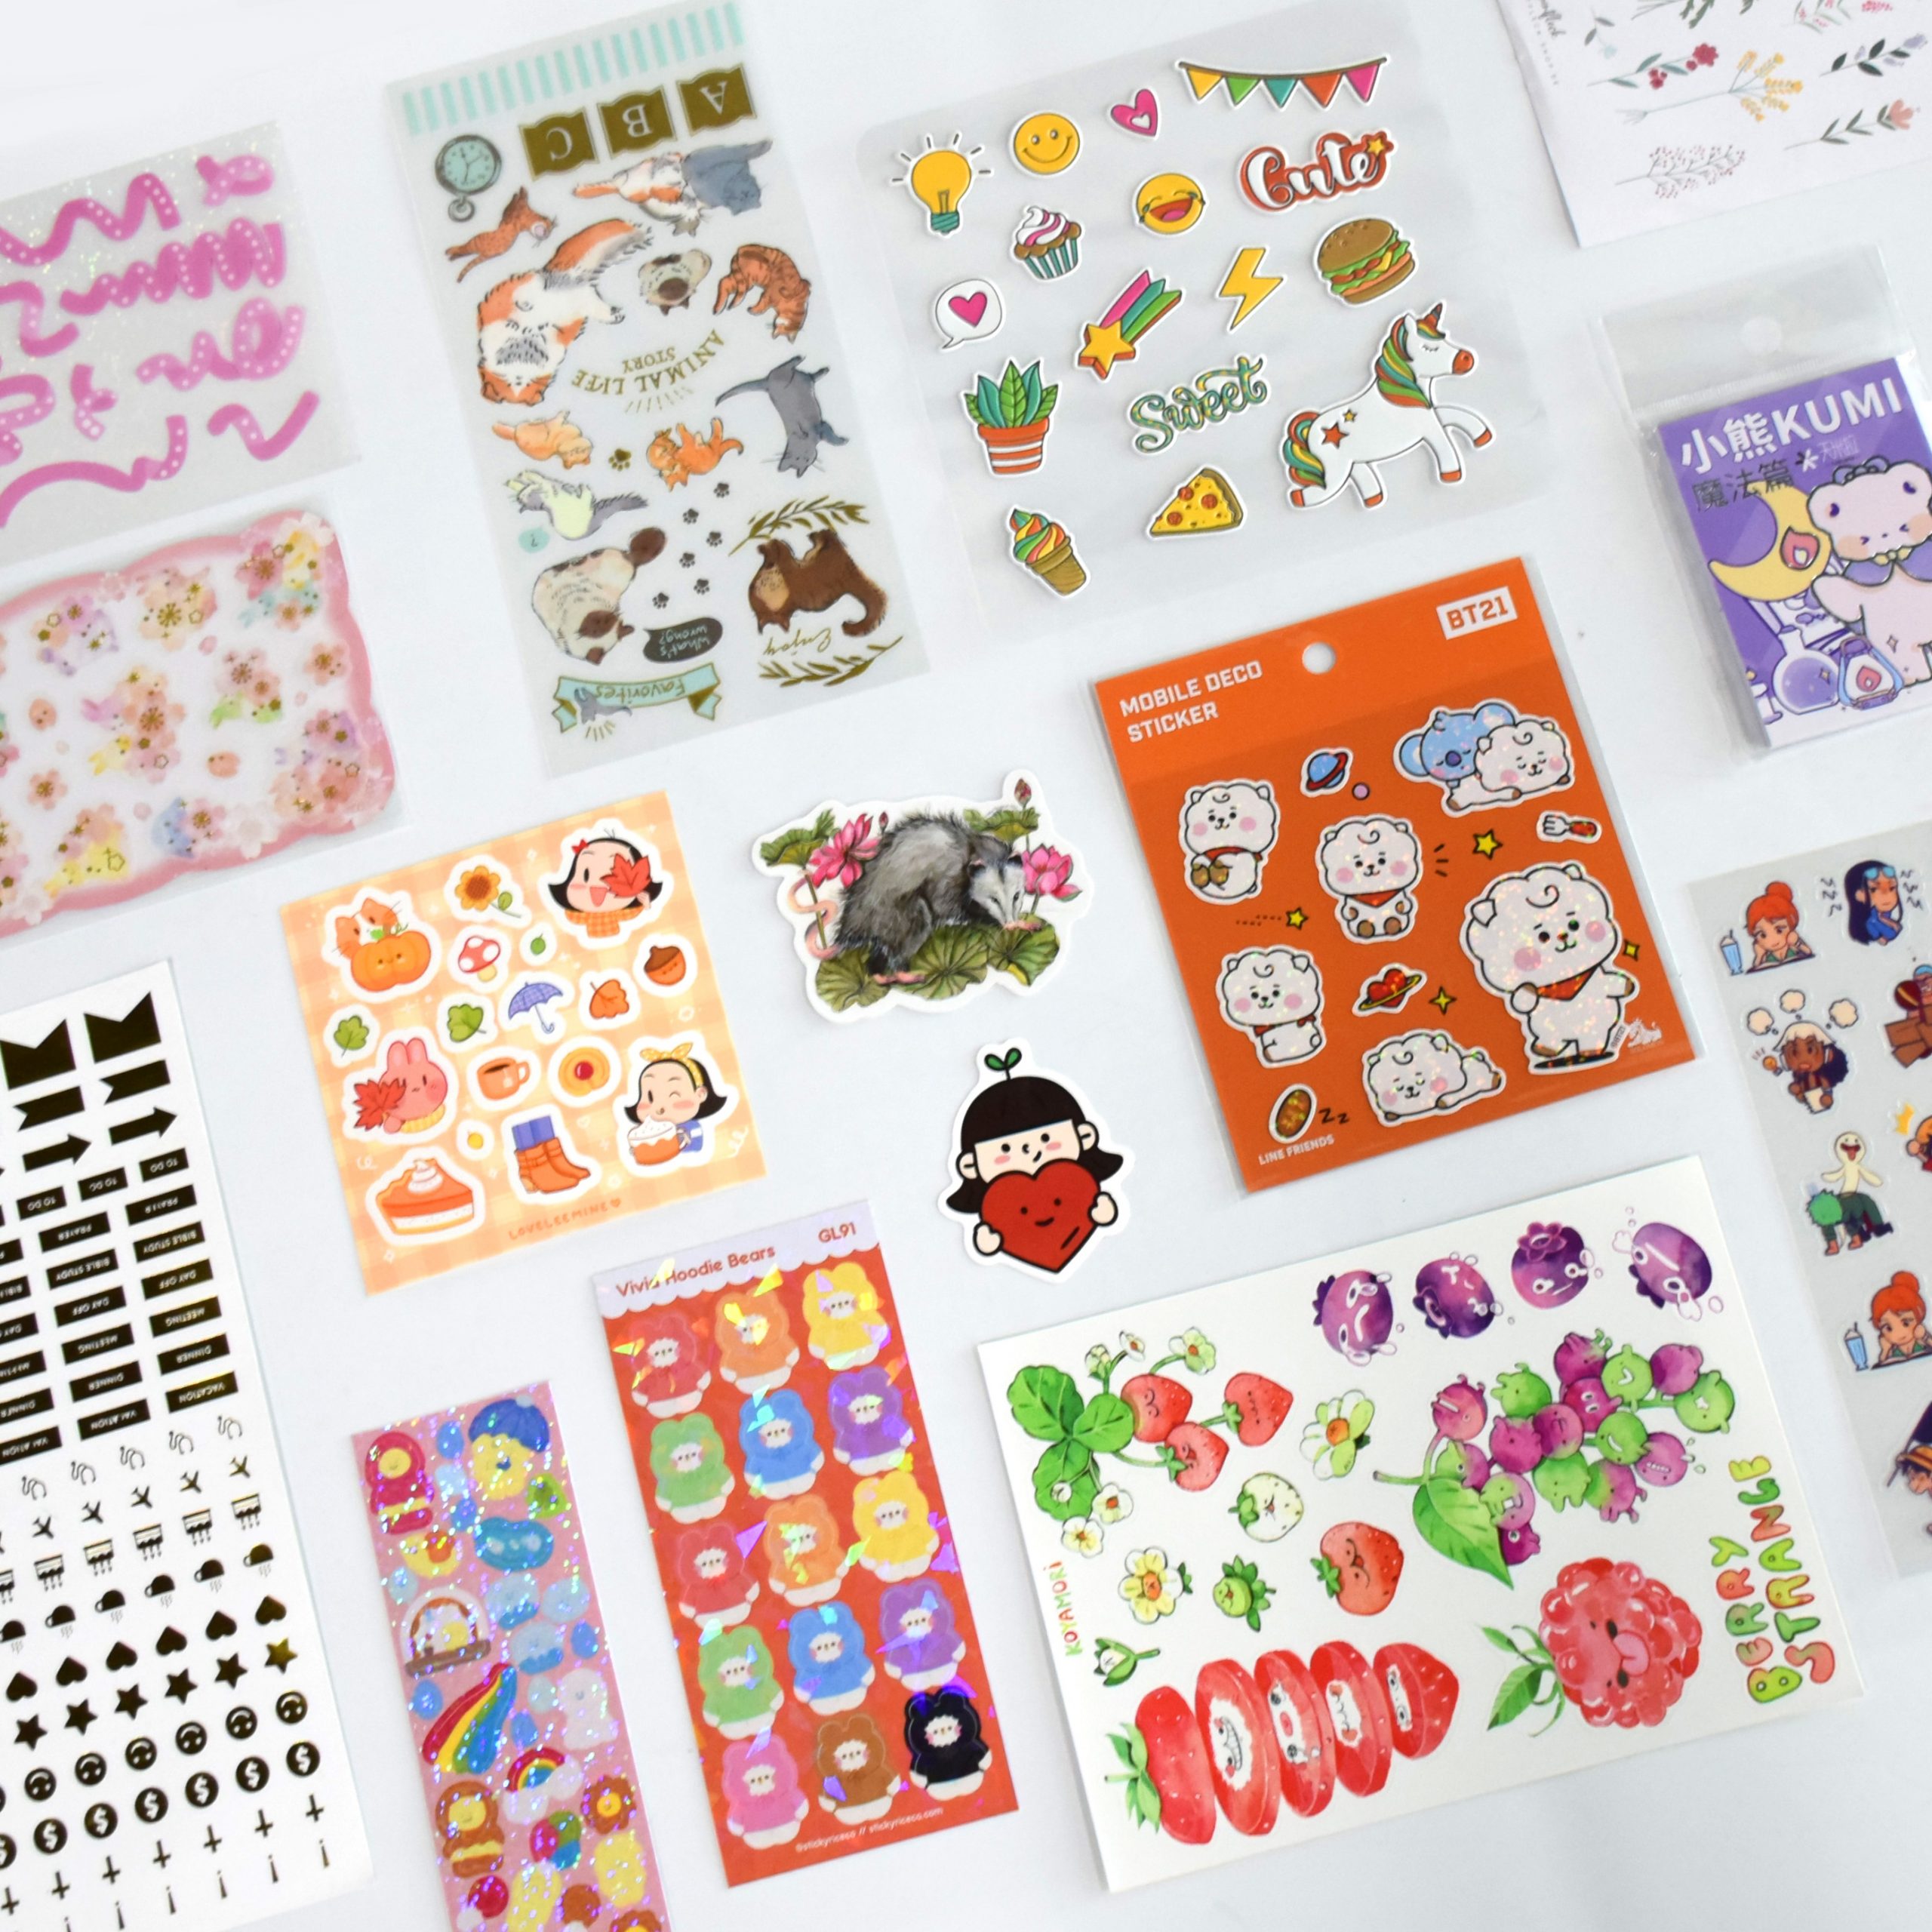 Various custom stickers